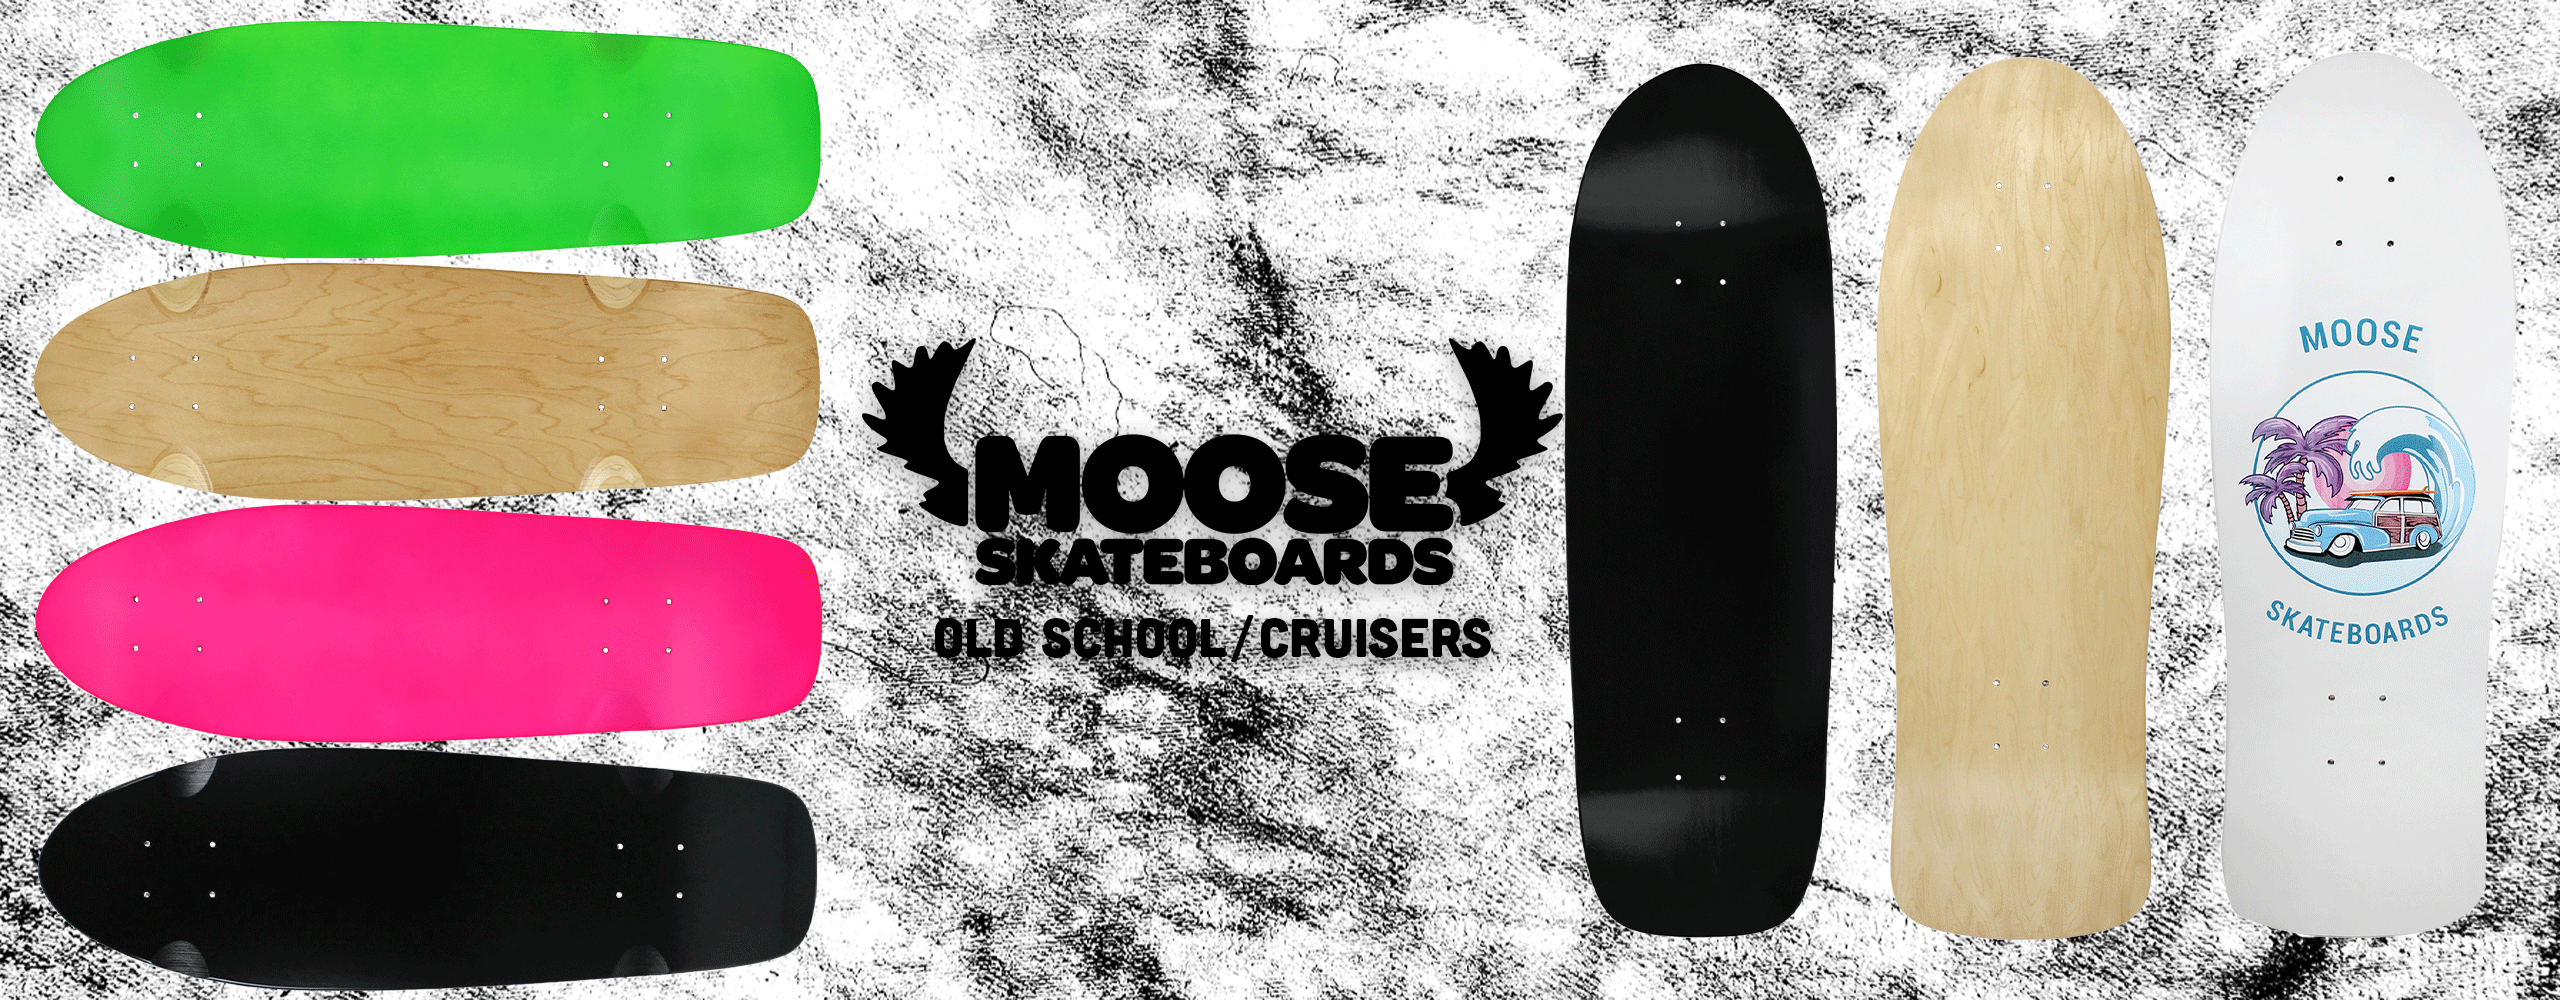 Moose Skateboard Deck Orange Stain 7.6' x 31.1' BRAND NEW IN SHRINK